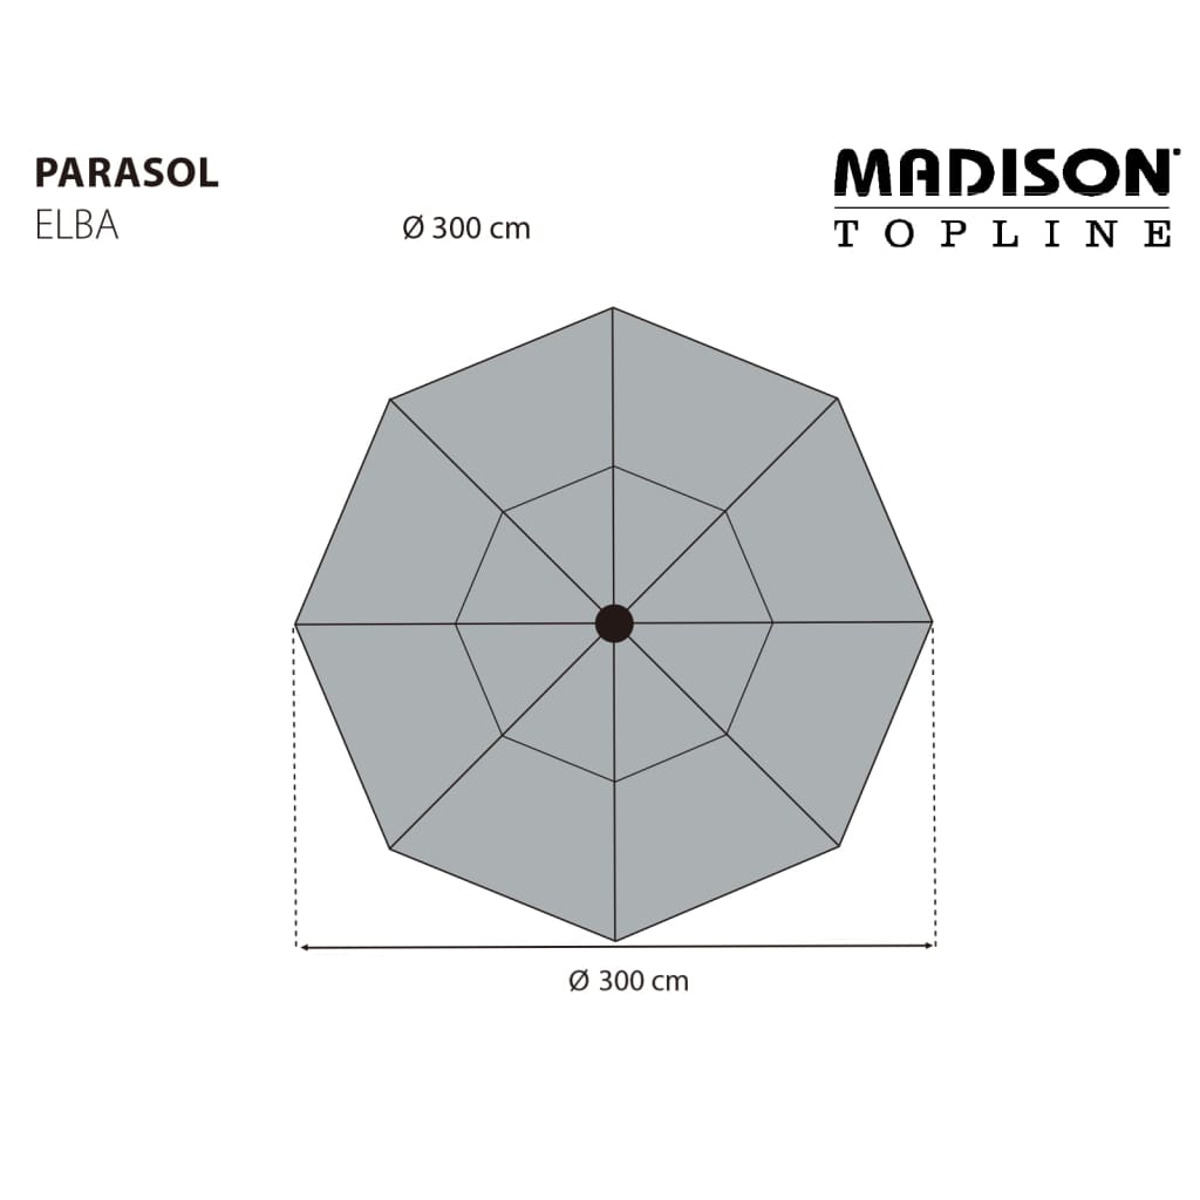 MADISON 447156 Sonnenschirm, Grau